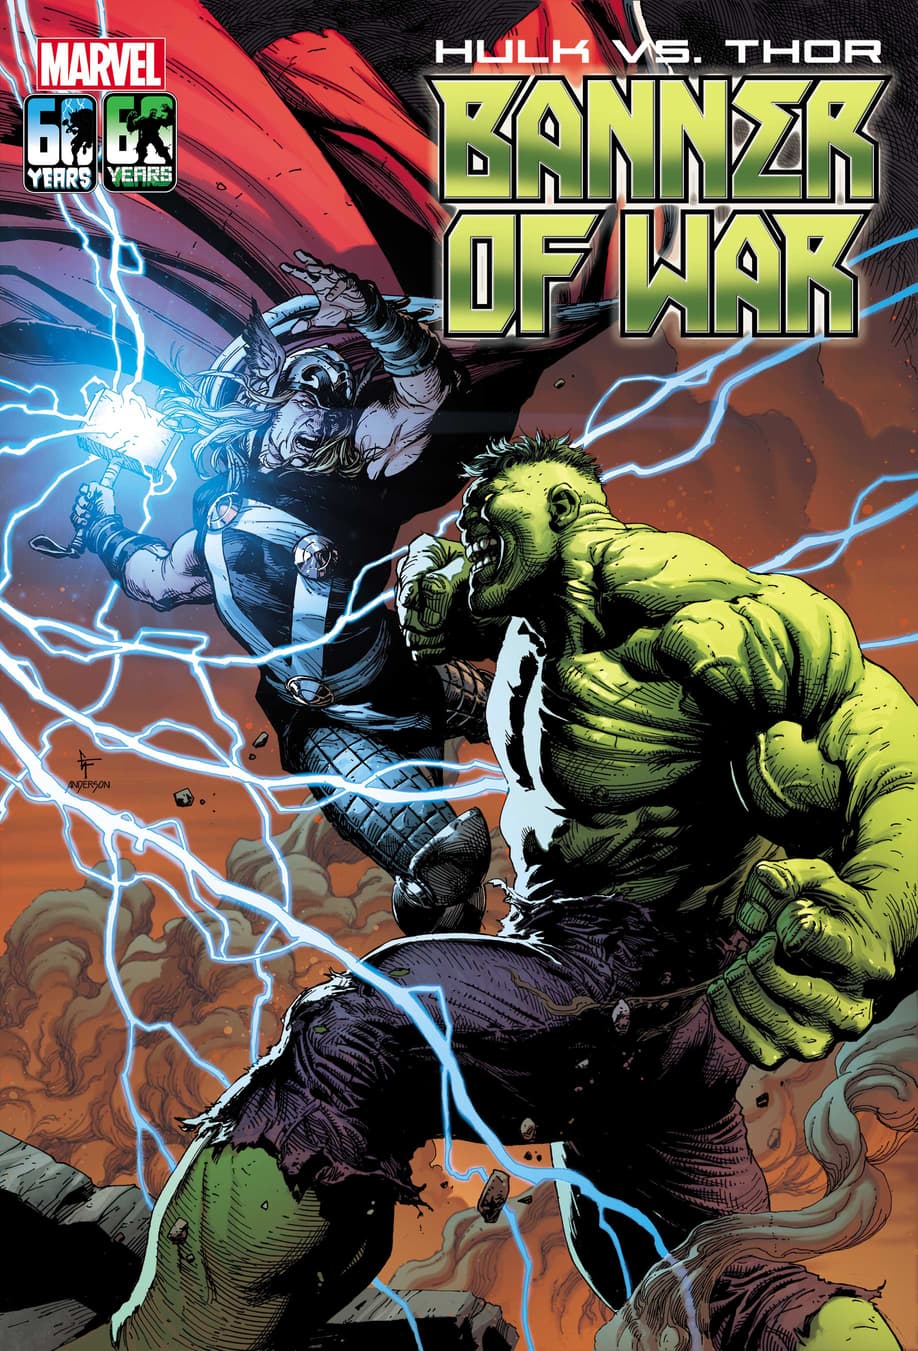 Hulk Vs. Thor: Banner of War Alpha #1 cover by Gary Frank